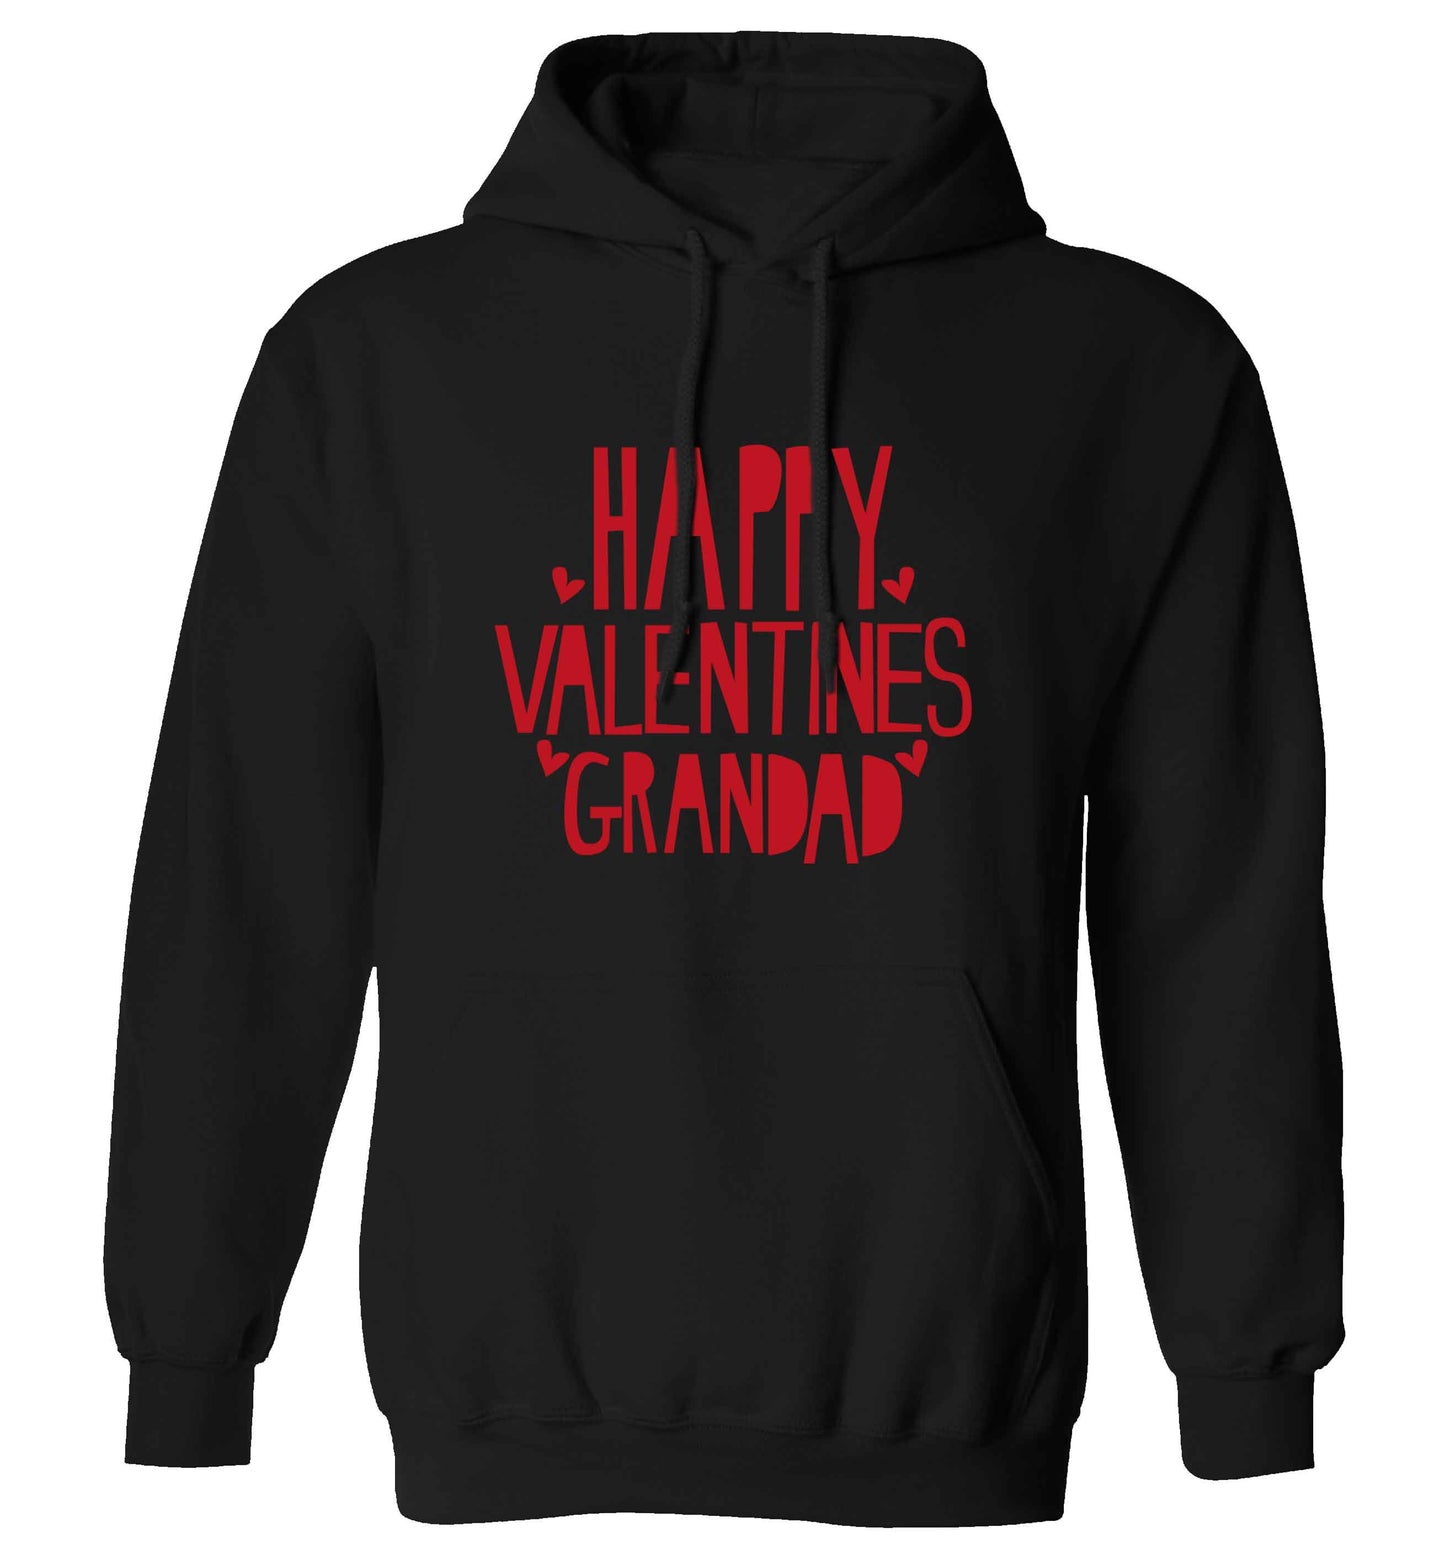 Happy valentines grandad adults unisex black hoodie 2XL